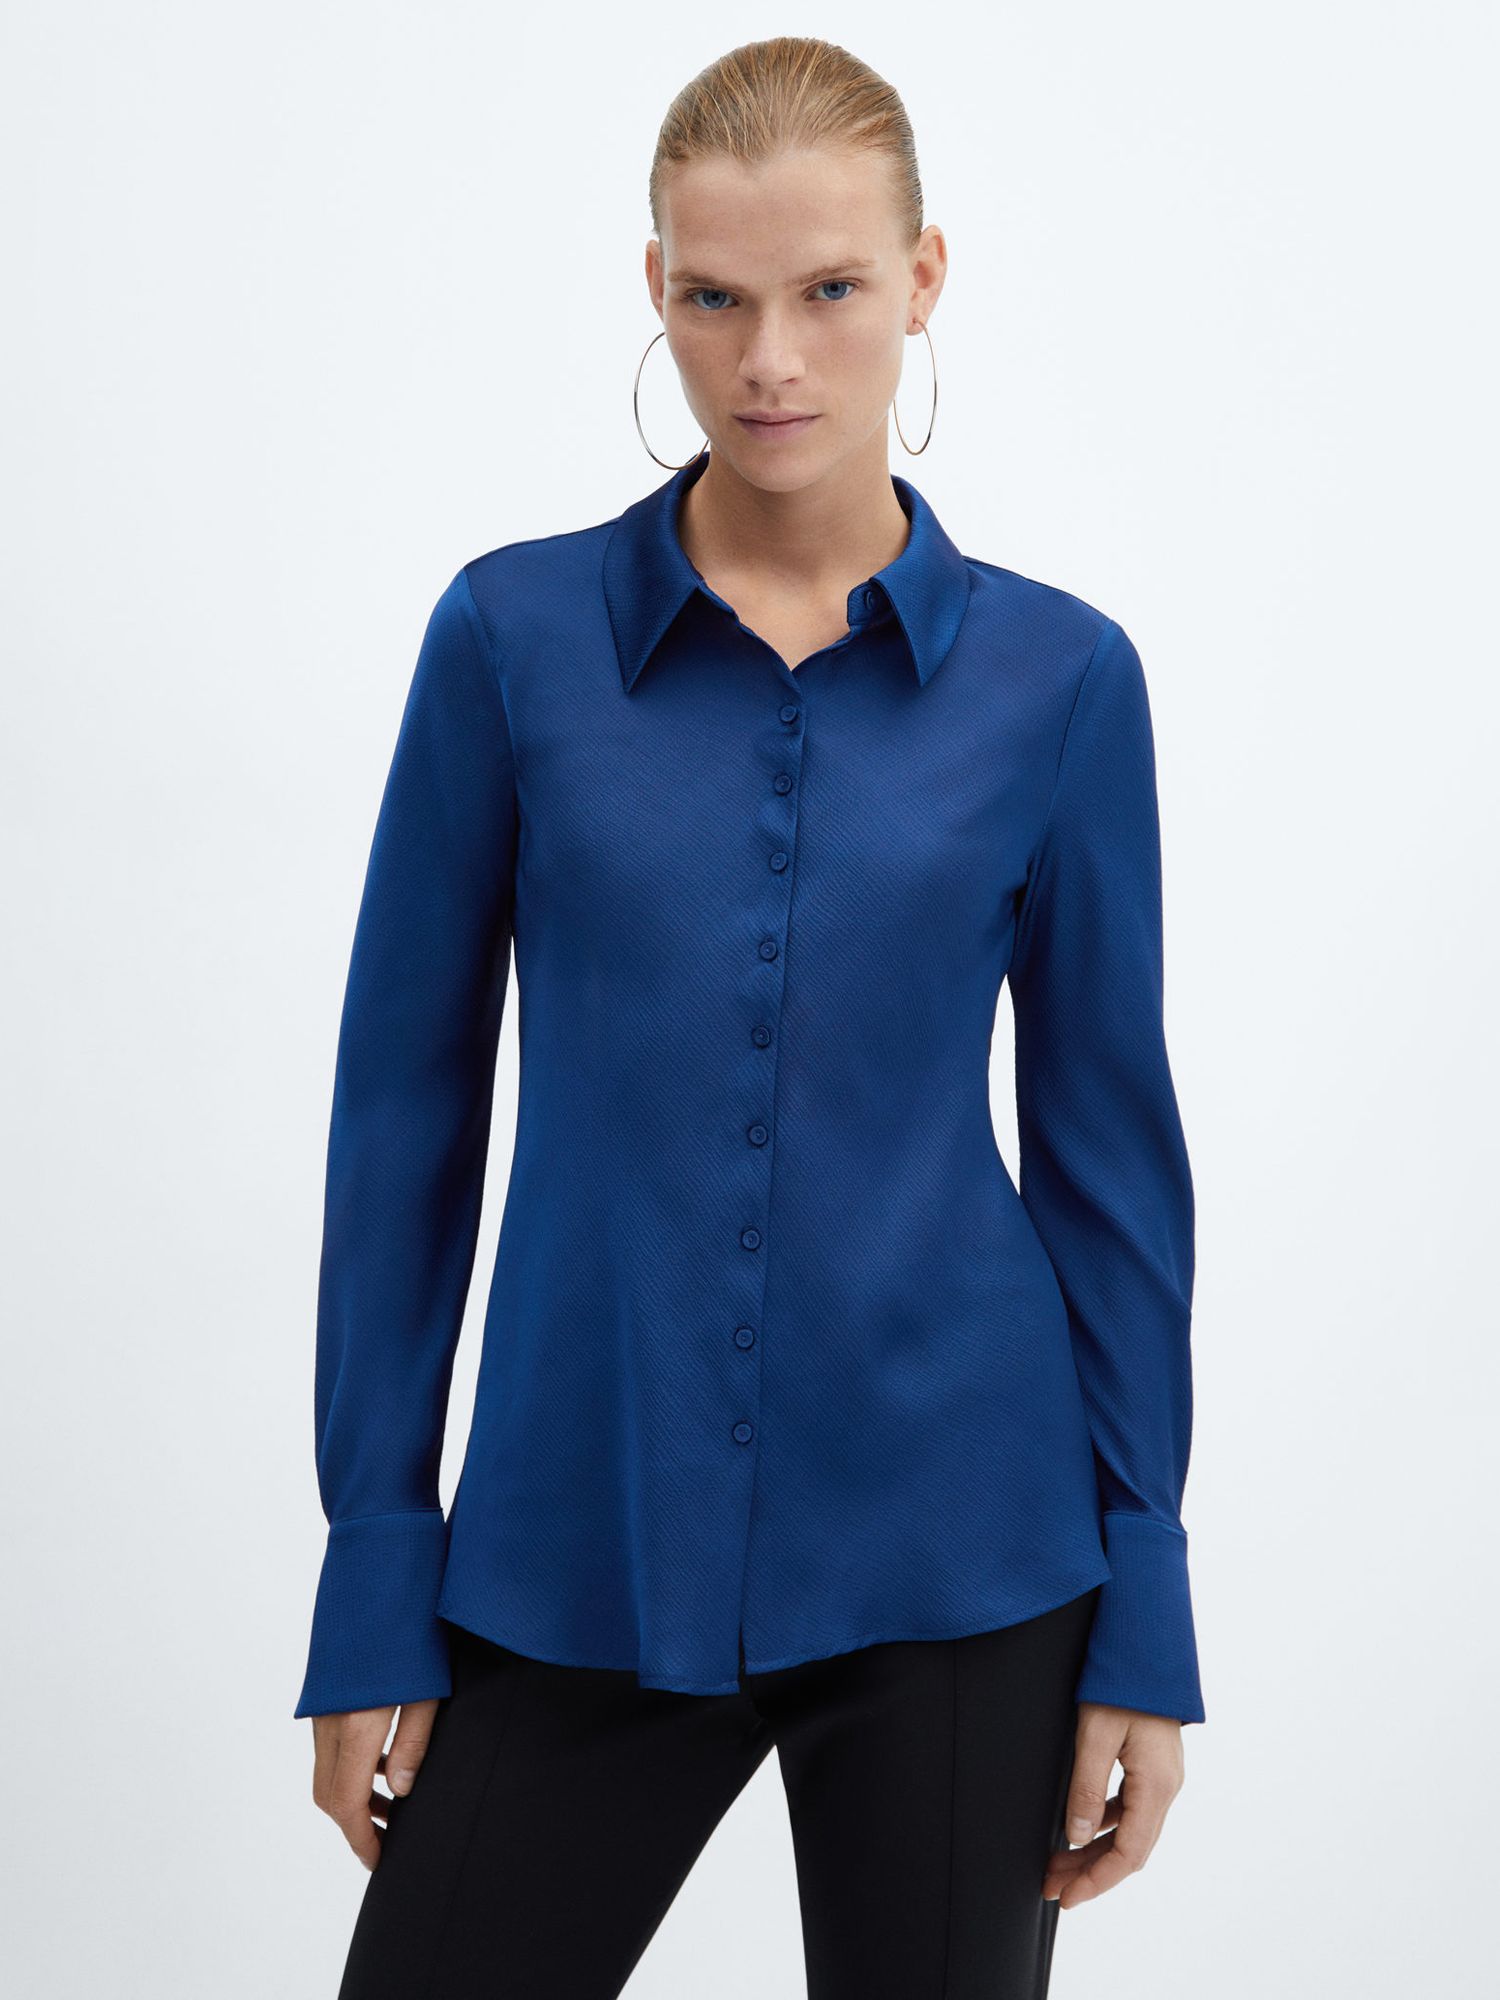 Mango Twisty Satin Textured Shirt, Medium Blue at John Lewis & Partners